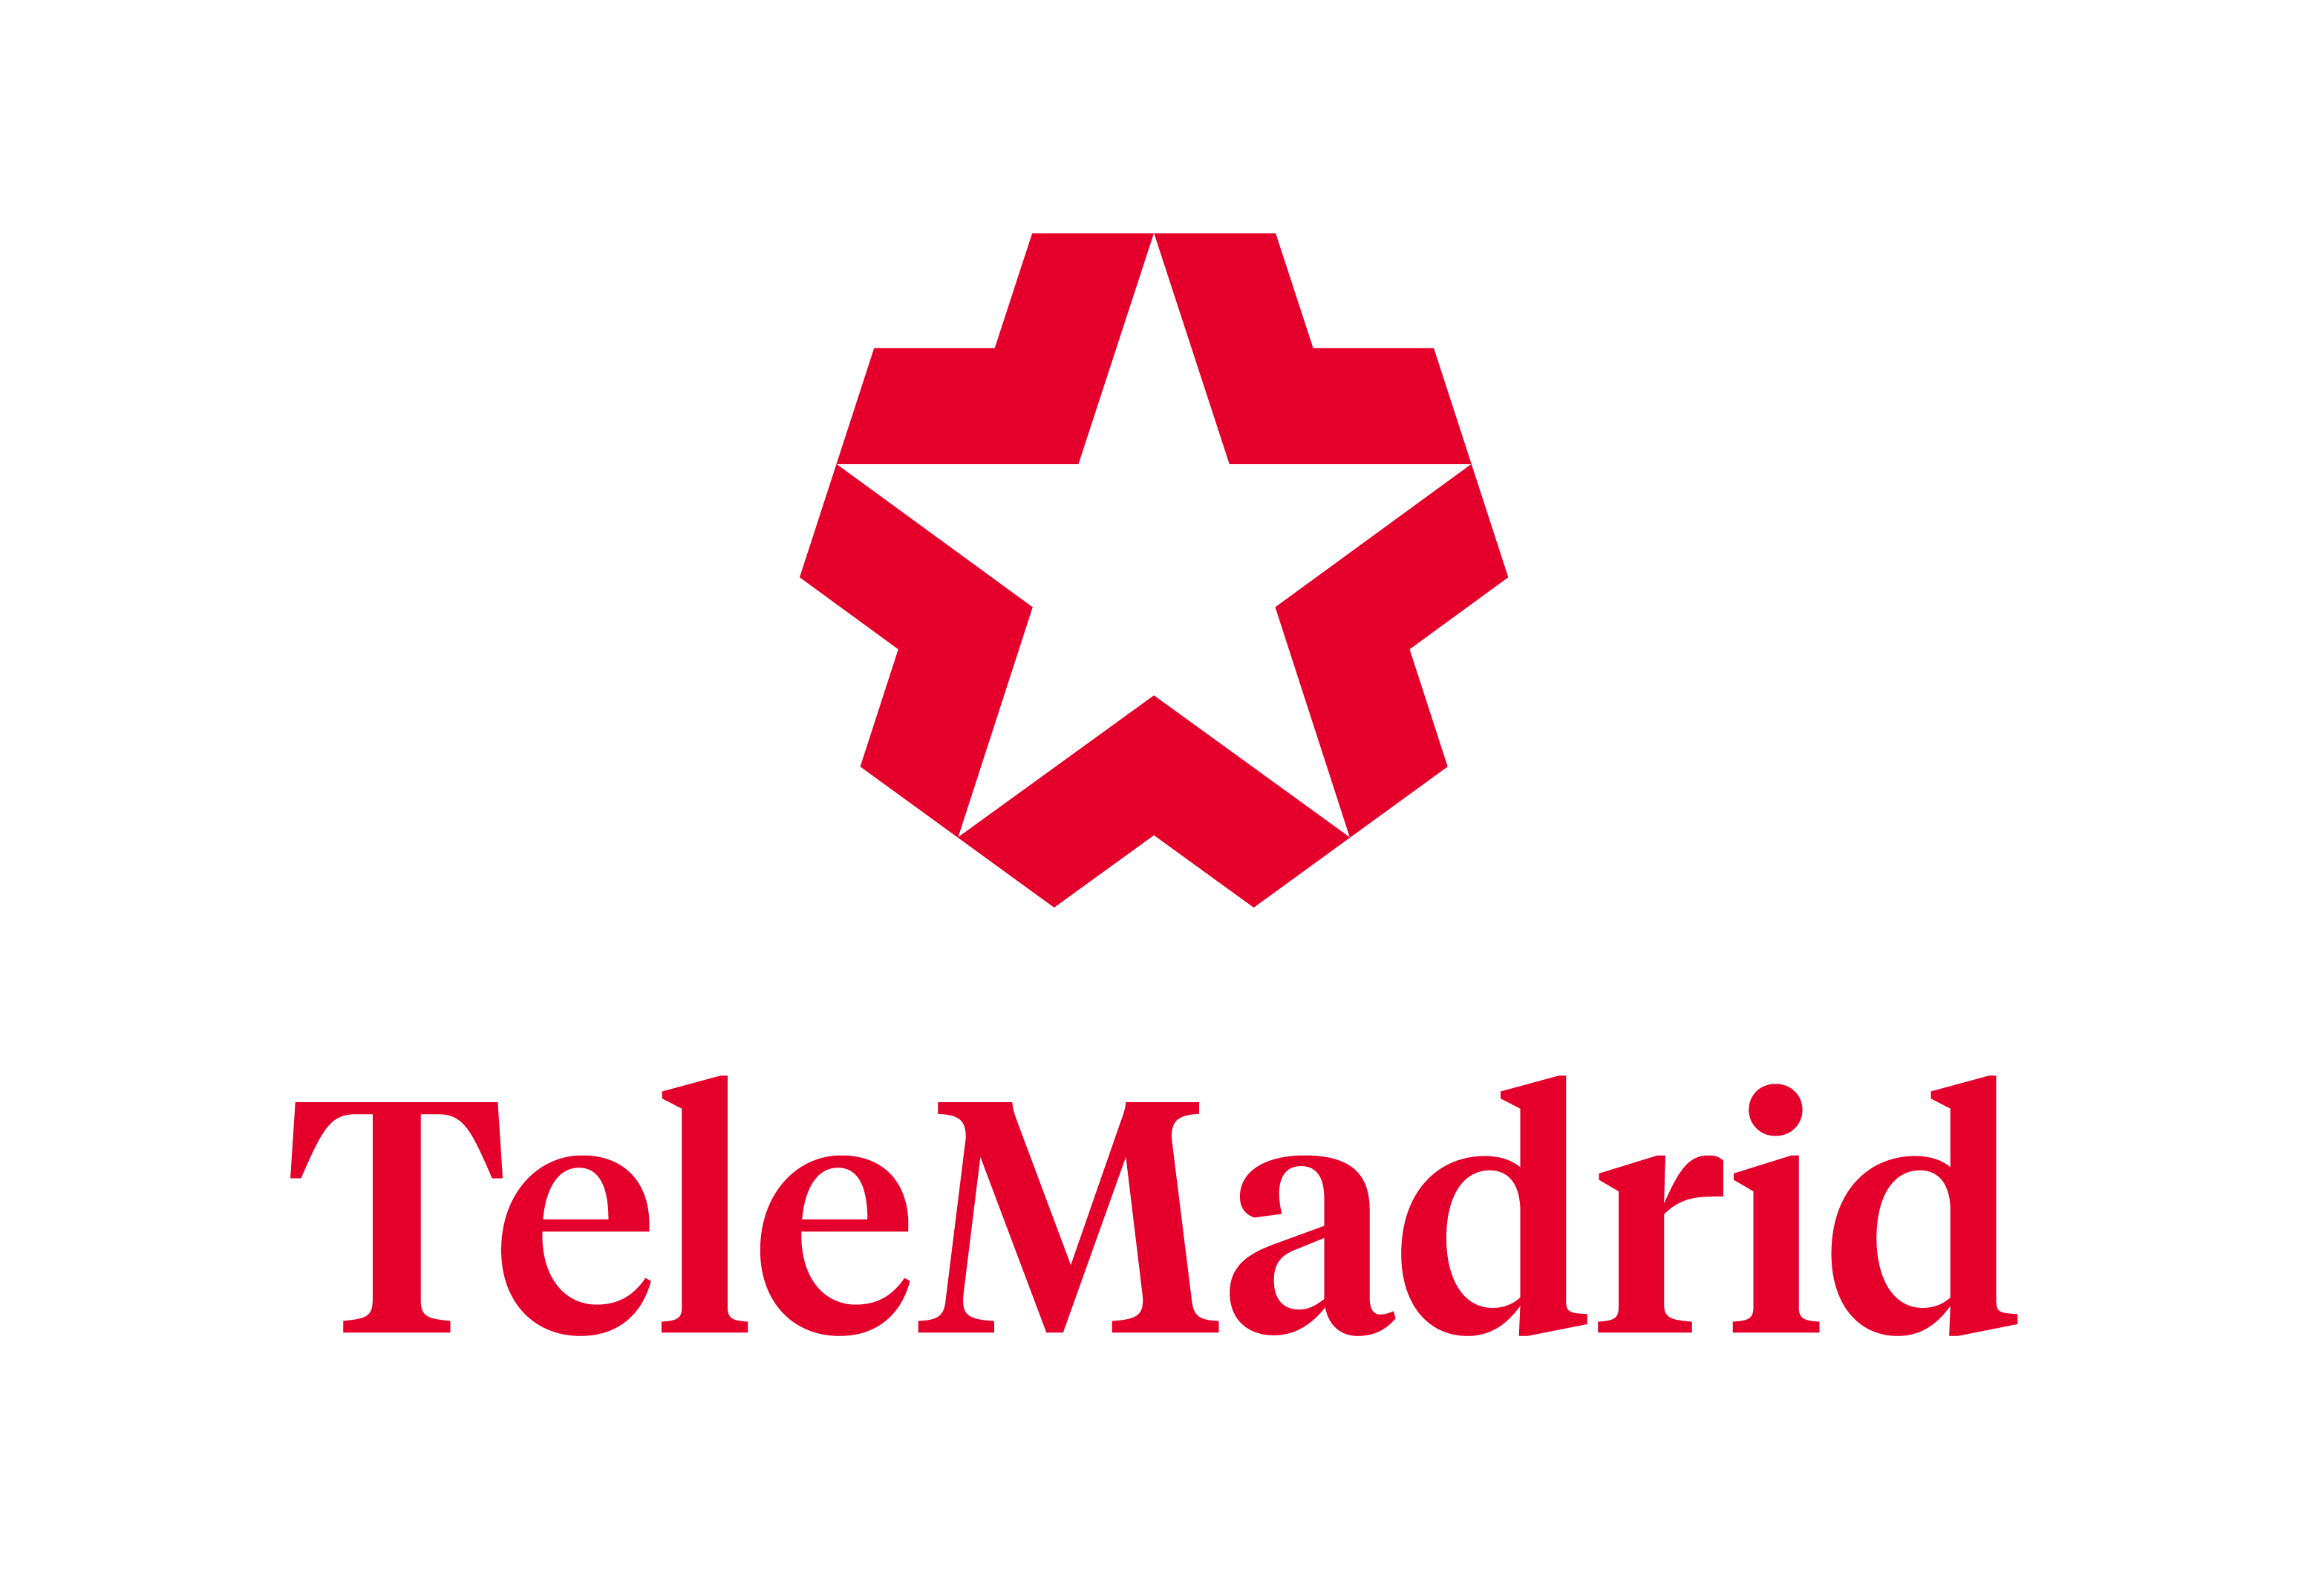 kisspng-telemadrid-community-of-madrid-logo-laotra-televis-people-walking-5b08d8f68fb655.8647416715273064865887